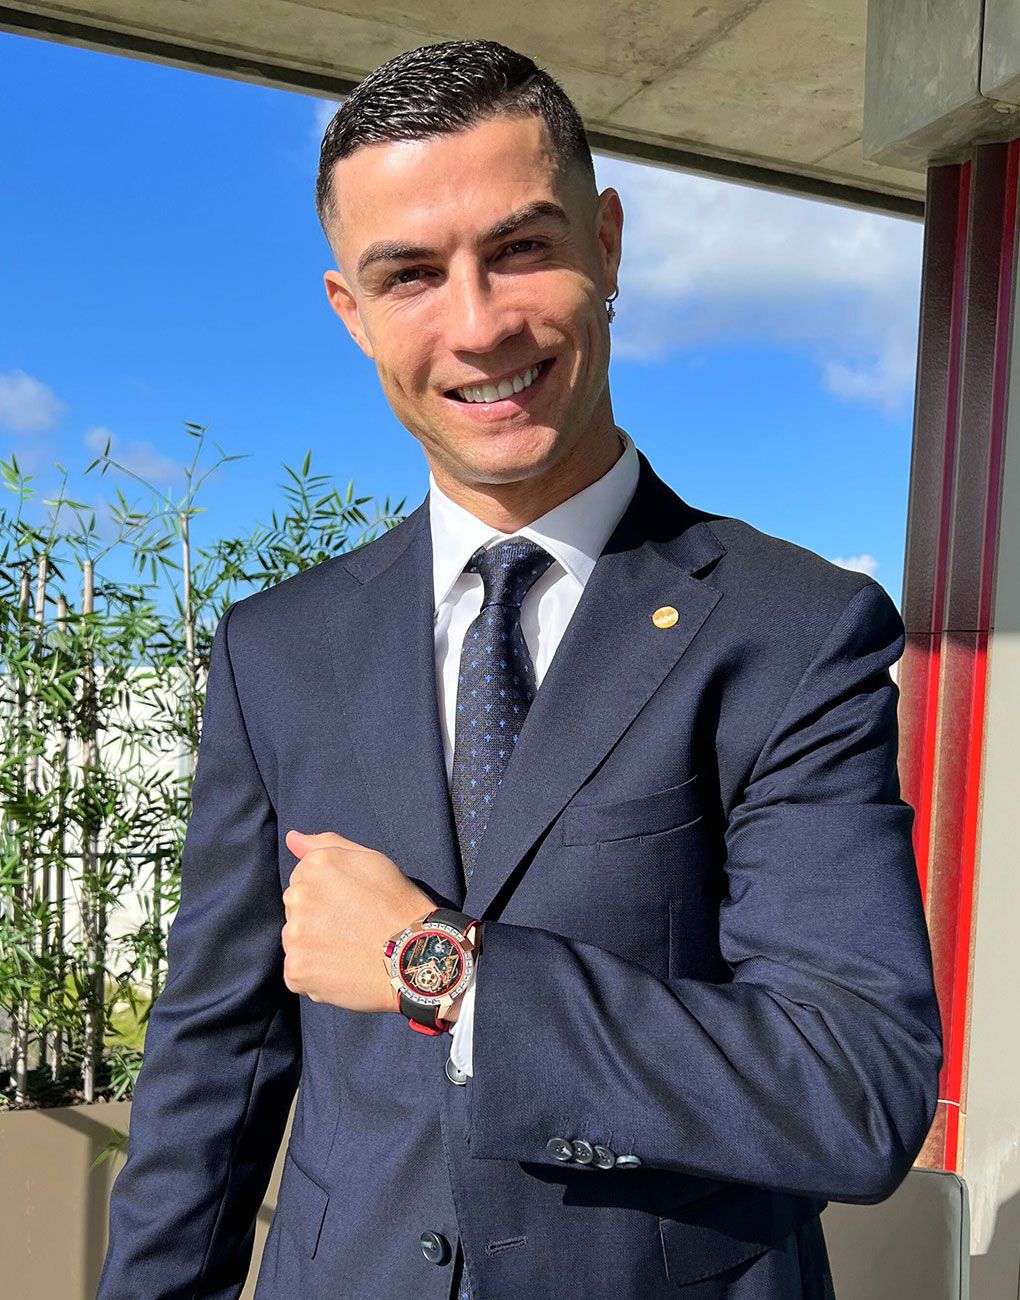 TAG Heuer Formula 1 Cristiano Ronaldo - CR7 - The Watch Guide